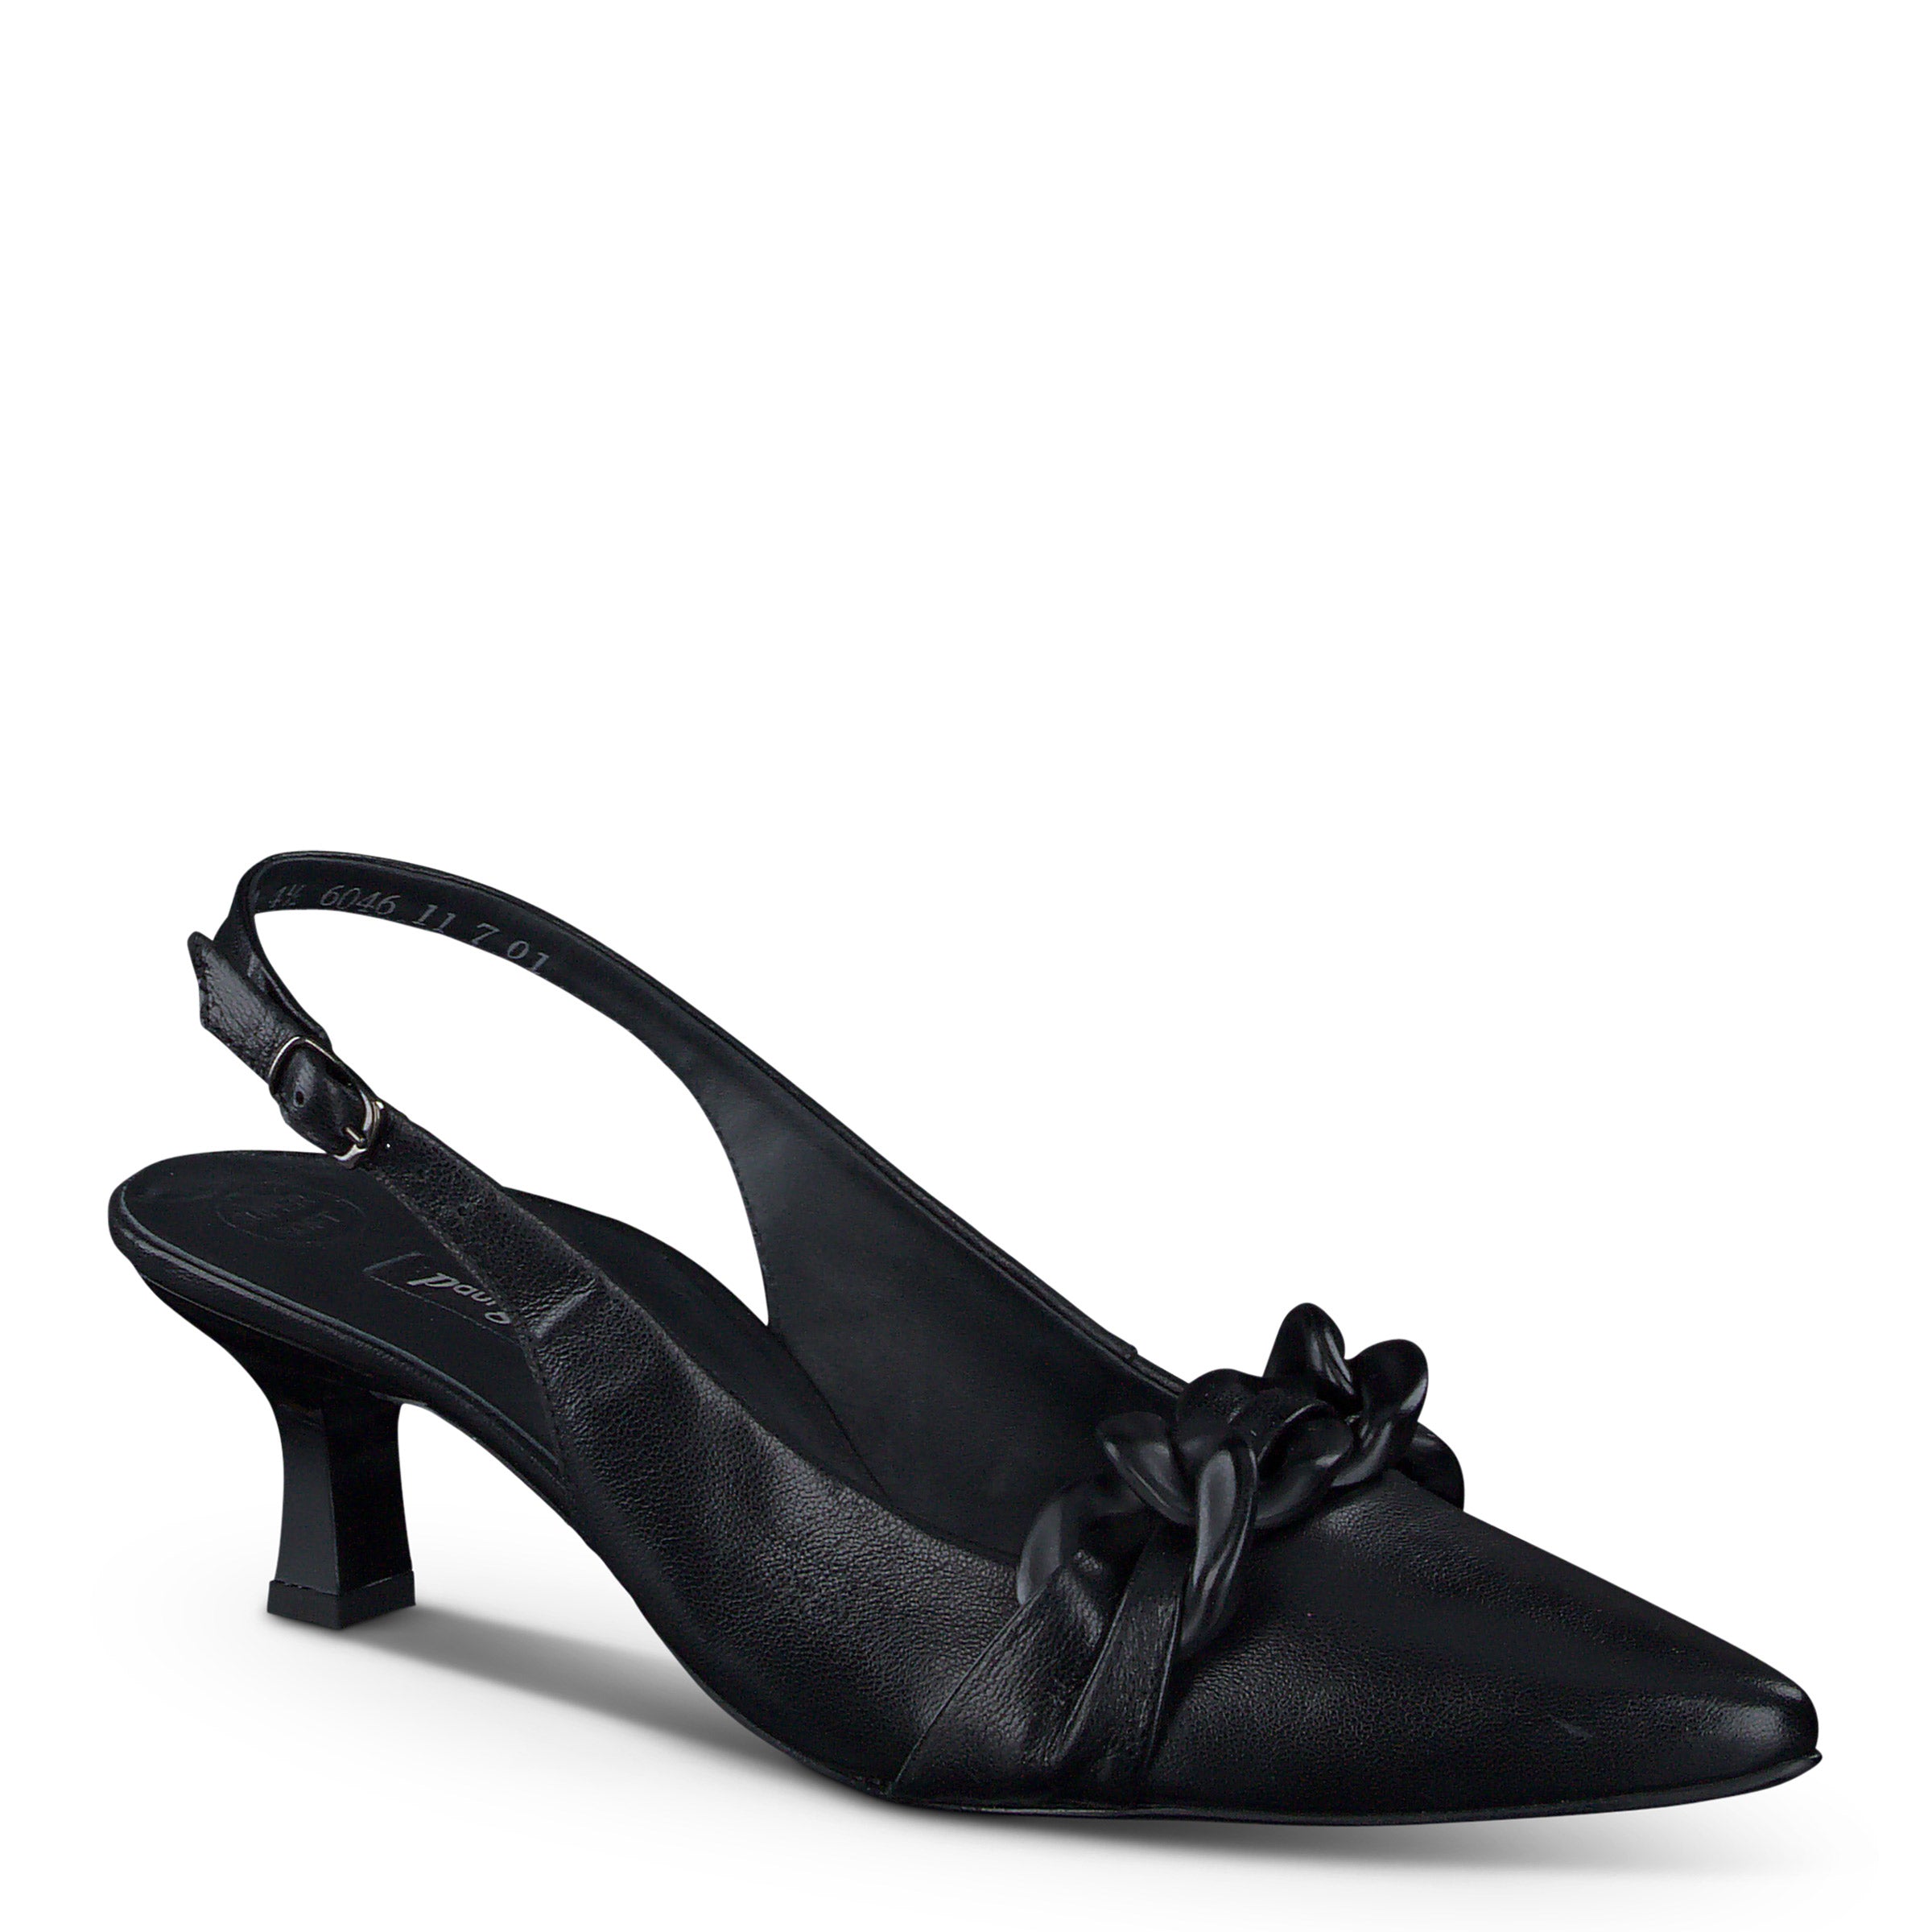 Women's Size 6.5 Natural Soul Black Serena sandals with 1 3/4” heel